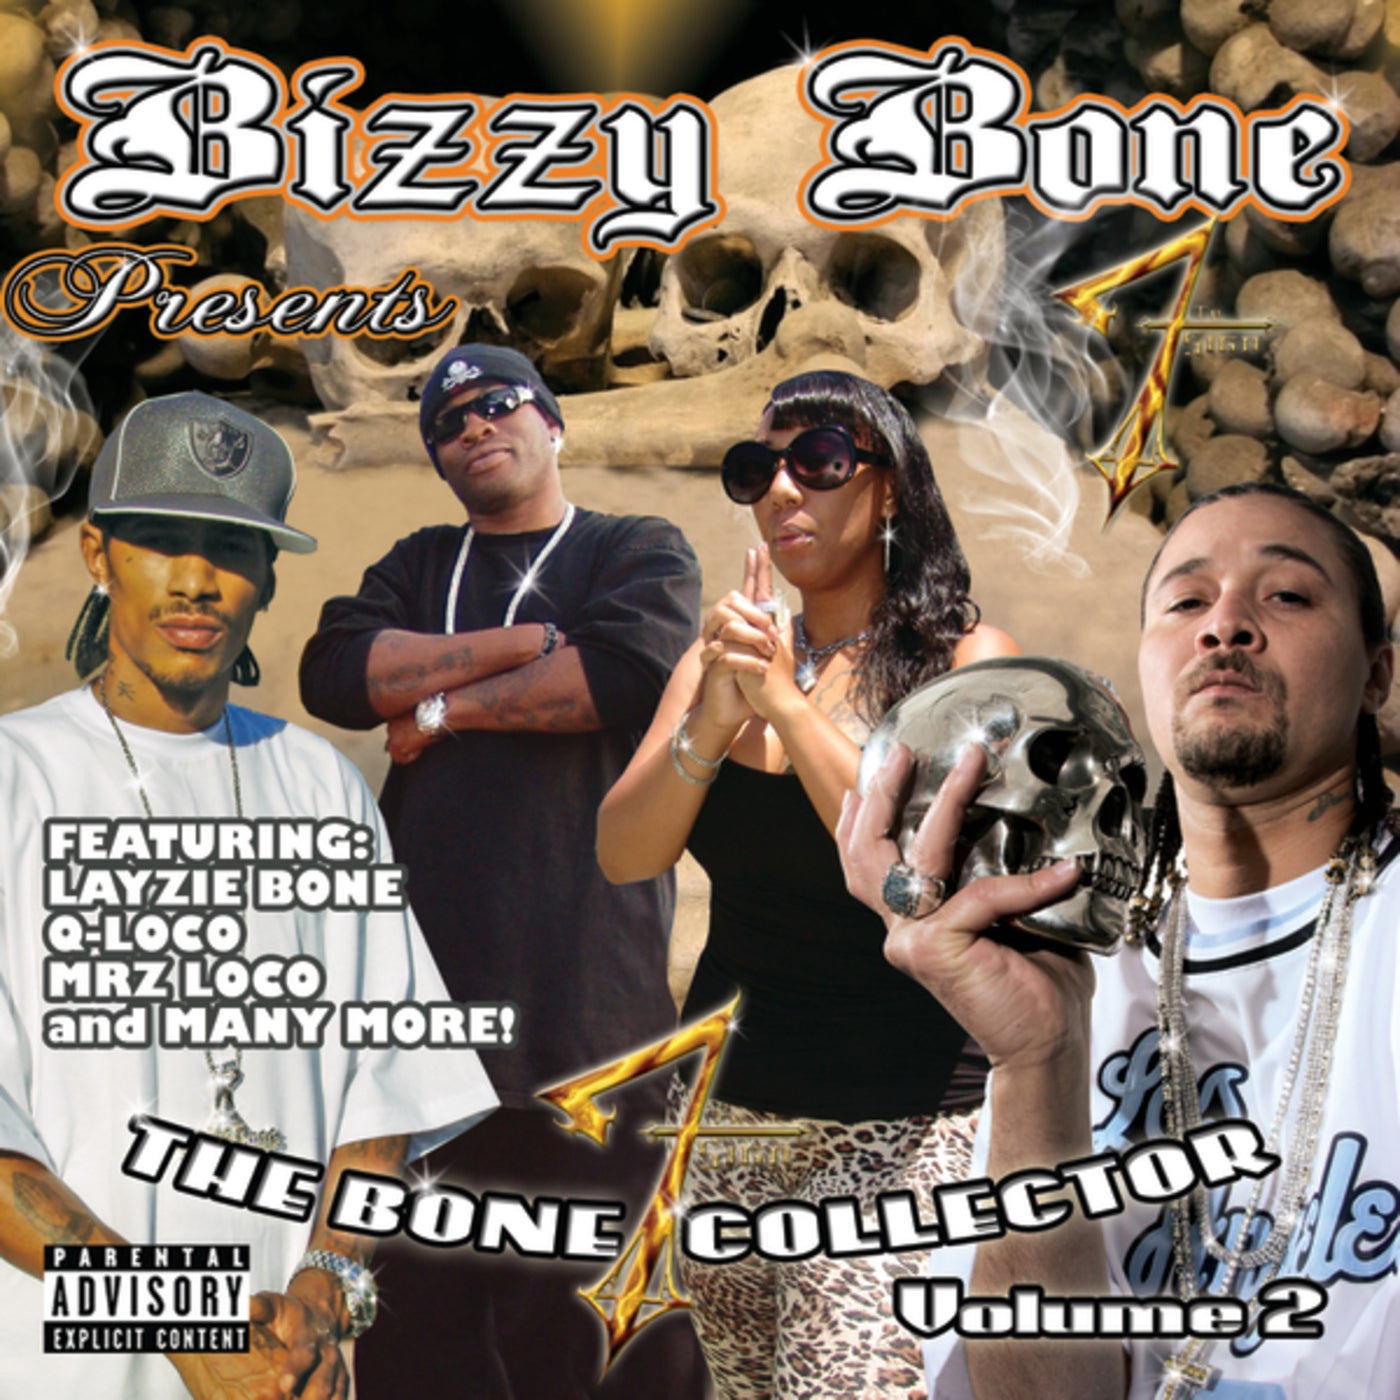 Bizzy Bone Presents The Bone Collector by Bizzy Bone, Q Loco, Mrz